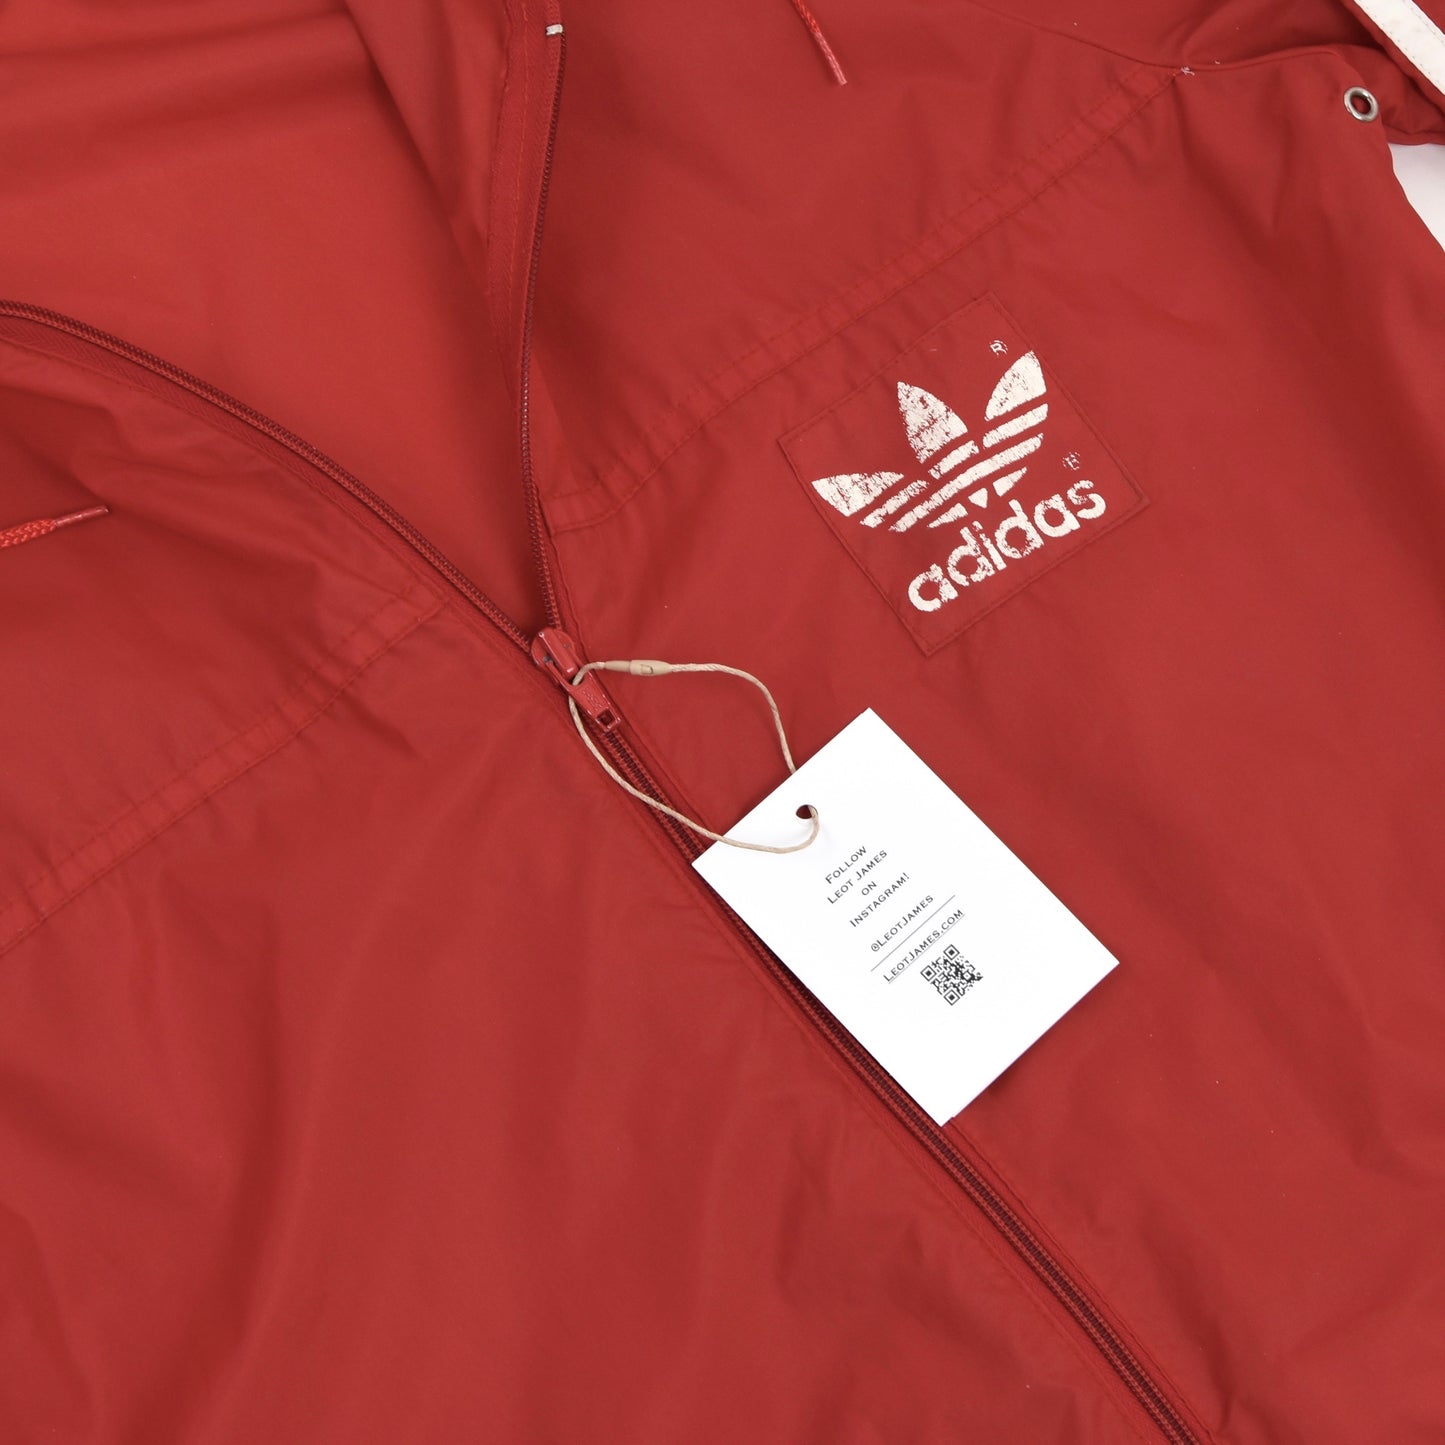 Vintage '80s Adidas Nylon Rain Jacket Size D38 - Red